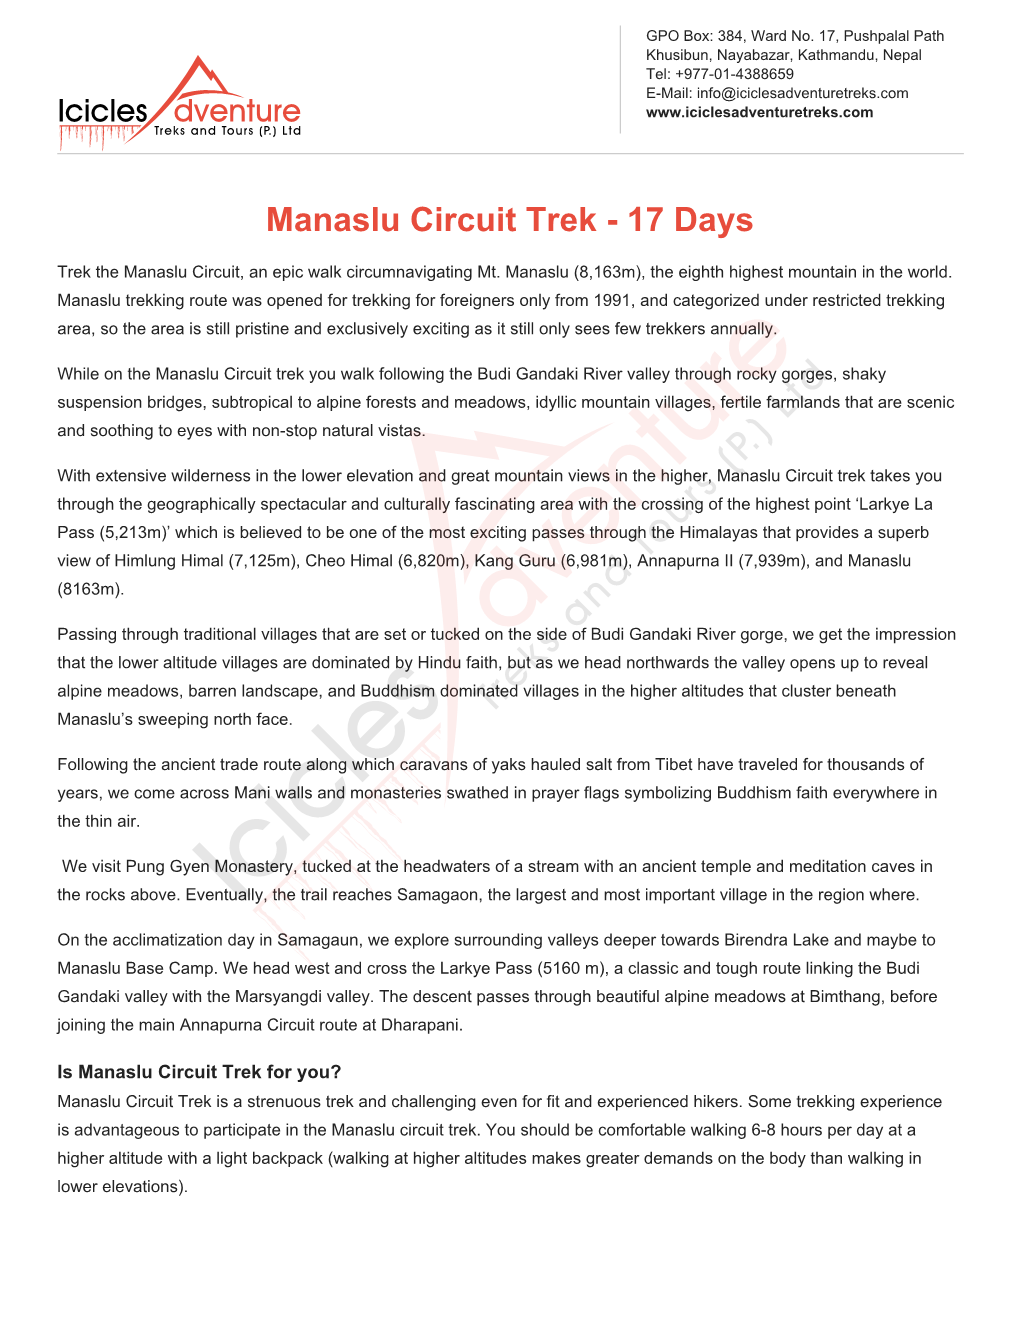 Manaslu Circuit Trek - 17 Days